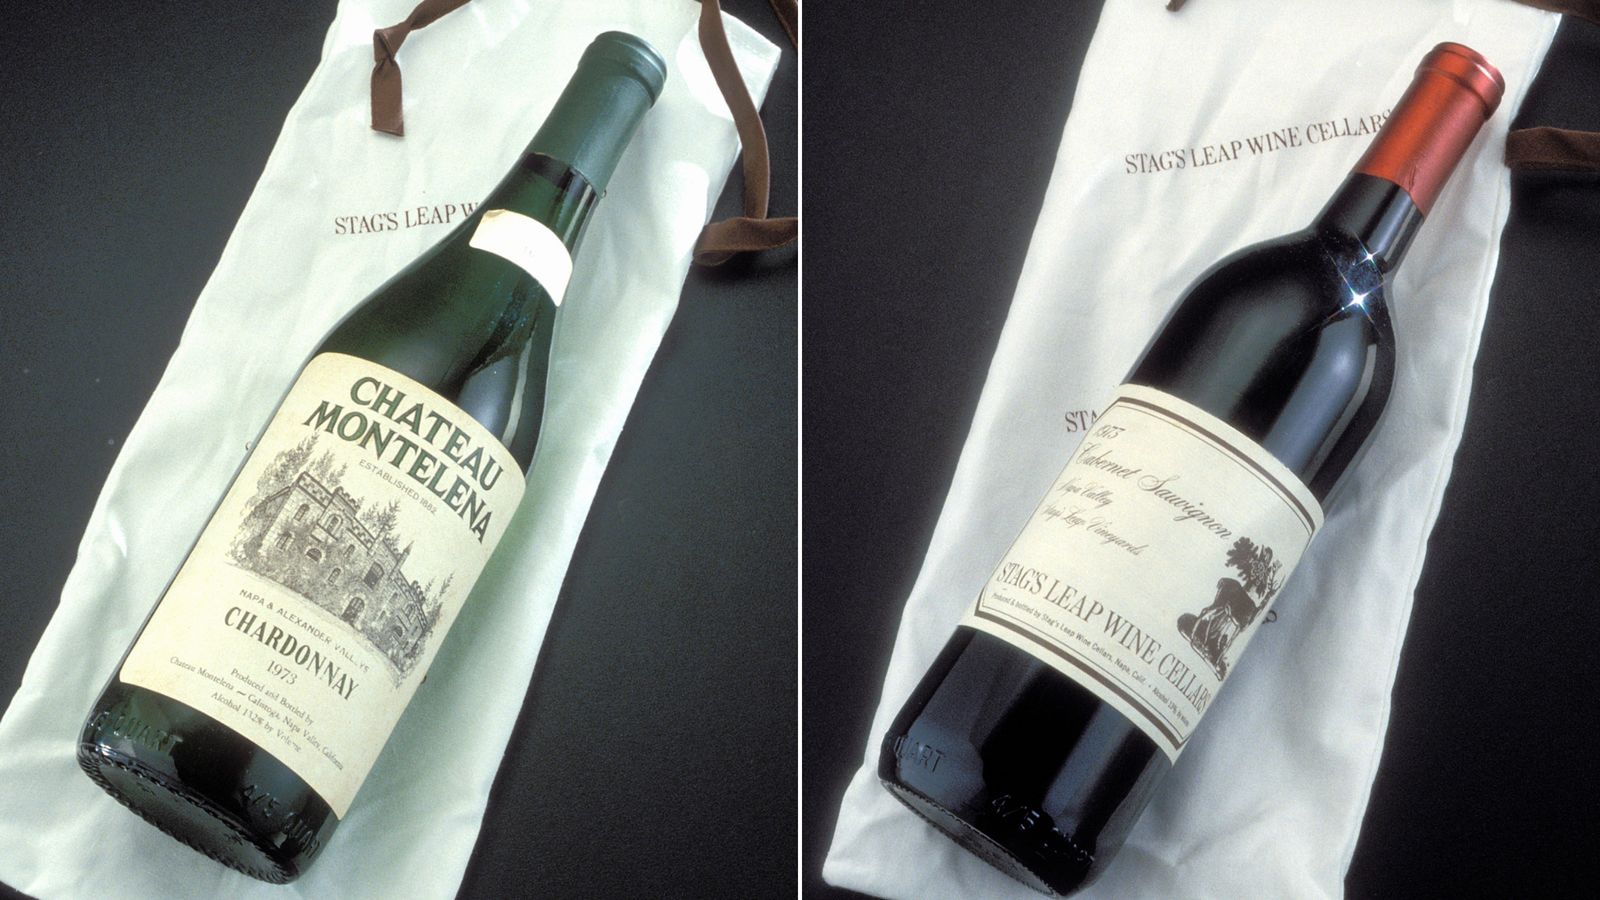 100 % authentisch garantiert! Judgment of Paris: wine CNN tasting | The forever changed that